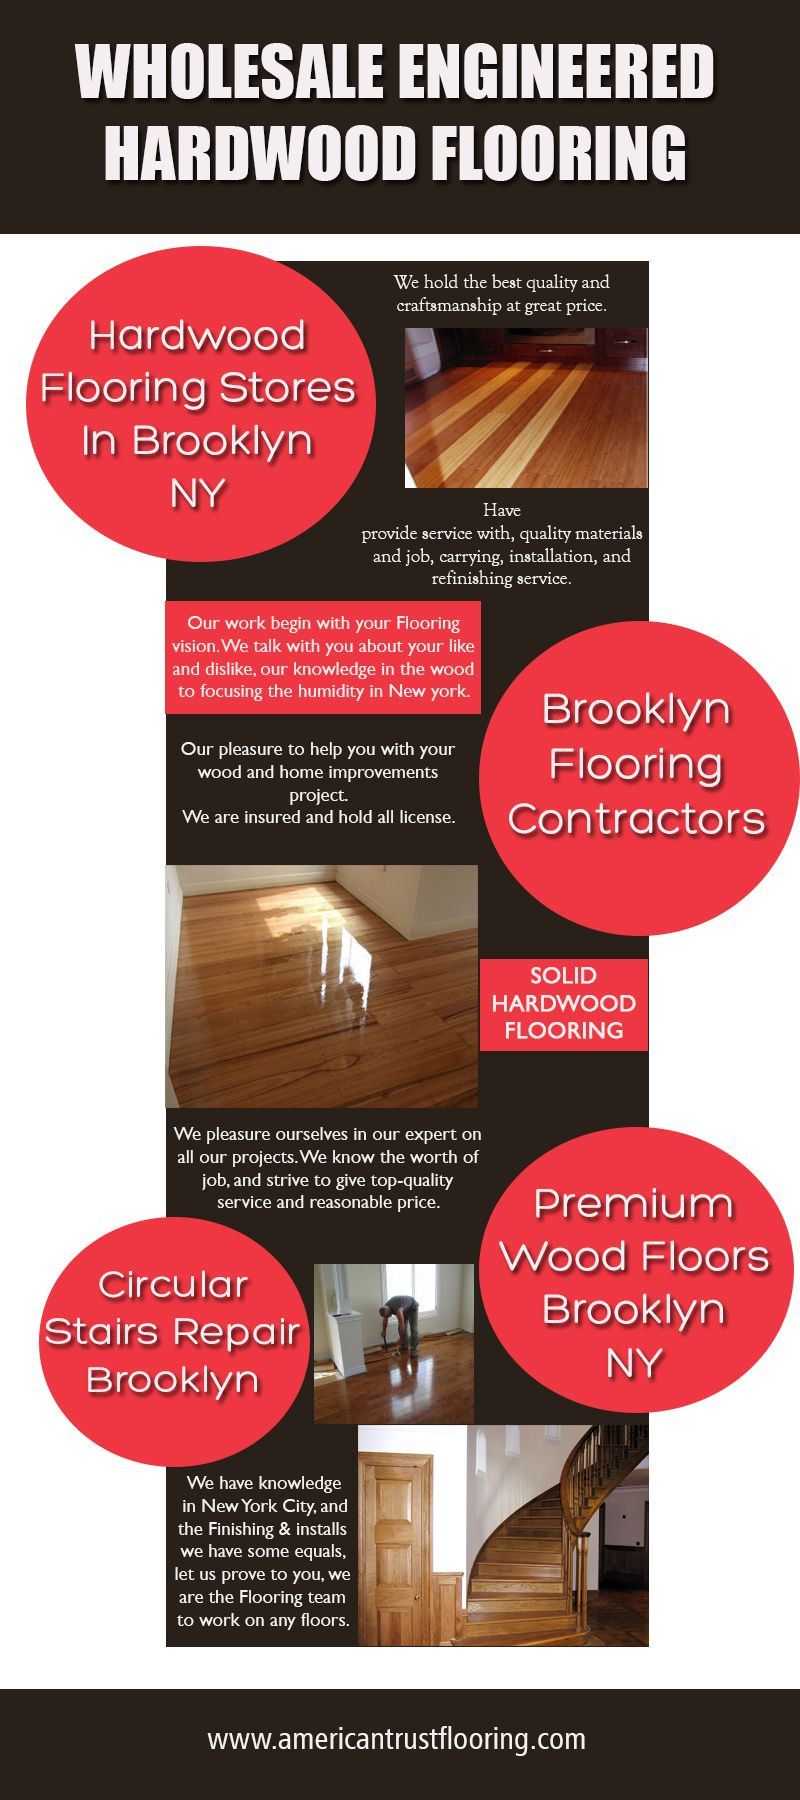 14 Wonderful Hardwood Flooring Refinishing Service 2024 free download hardwood flooring refinishing service of wood floor nyc hardwood floorny on pinterest within 65de85ddf512aaf94729c5346e3baf94